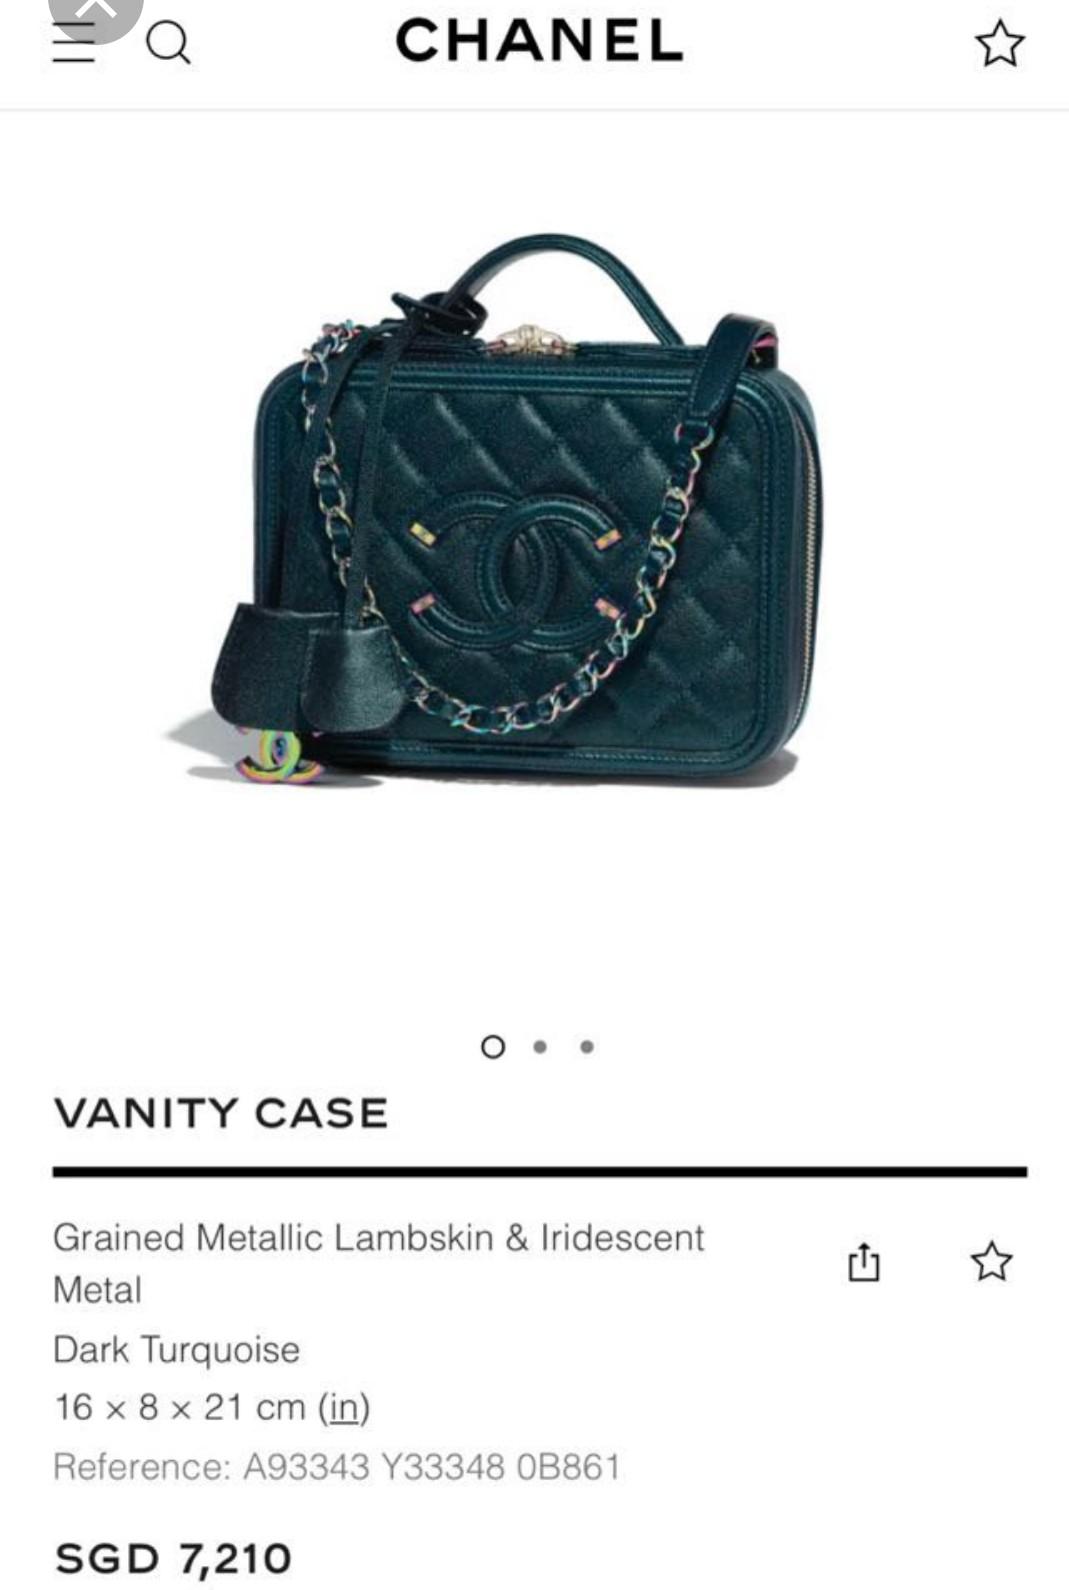 Chanel Iridescent Turquoise Filigree Vanity Case with Rainbow hardware